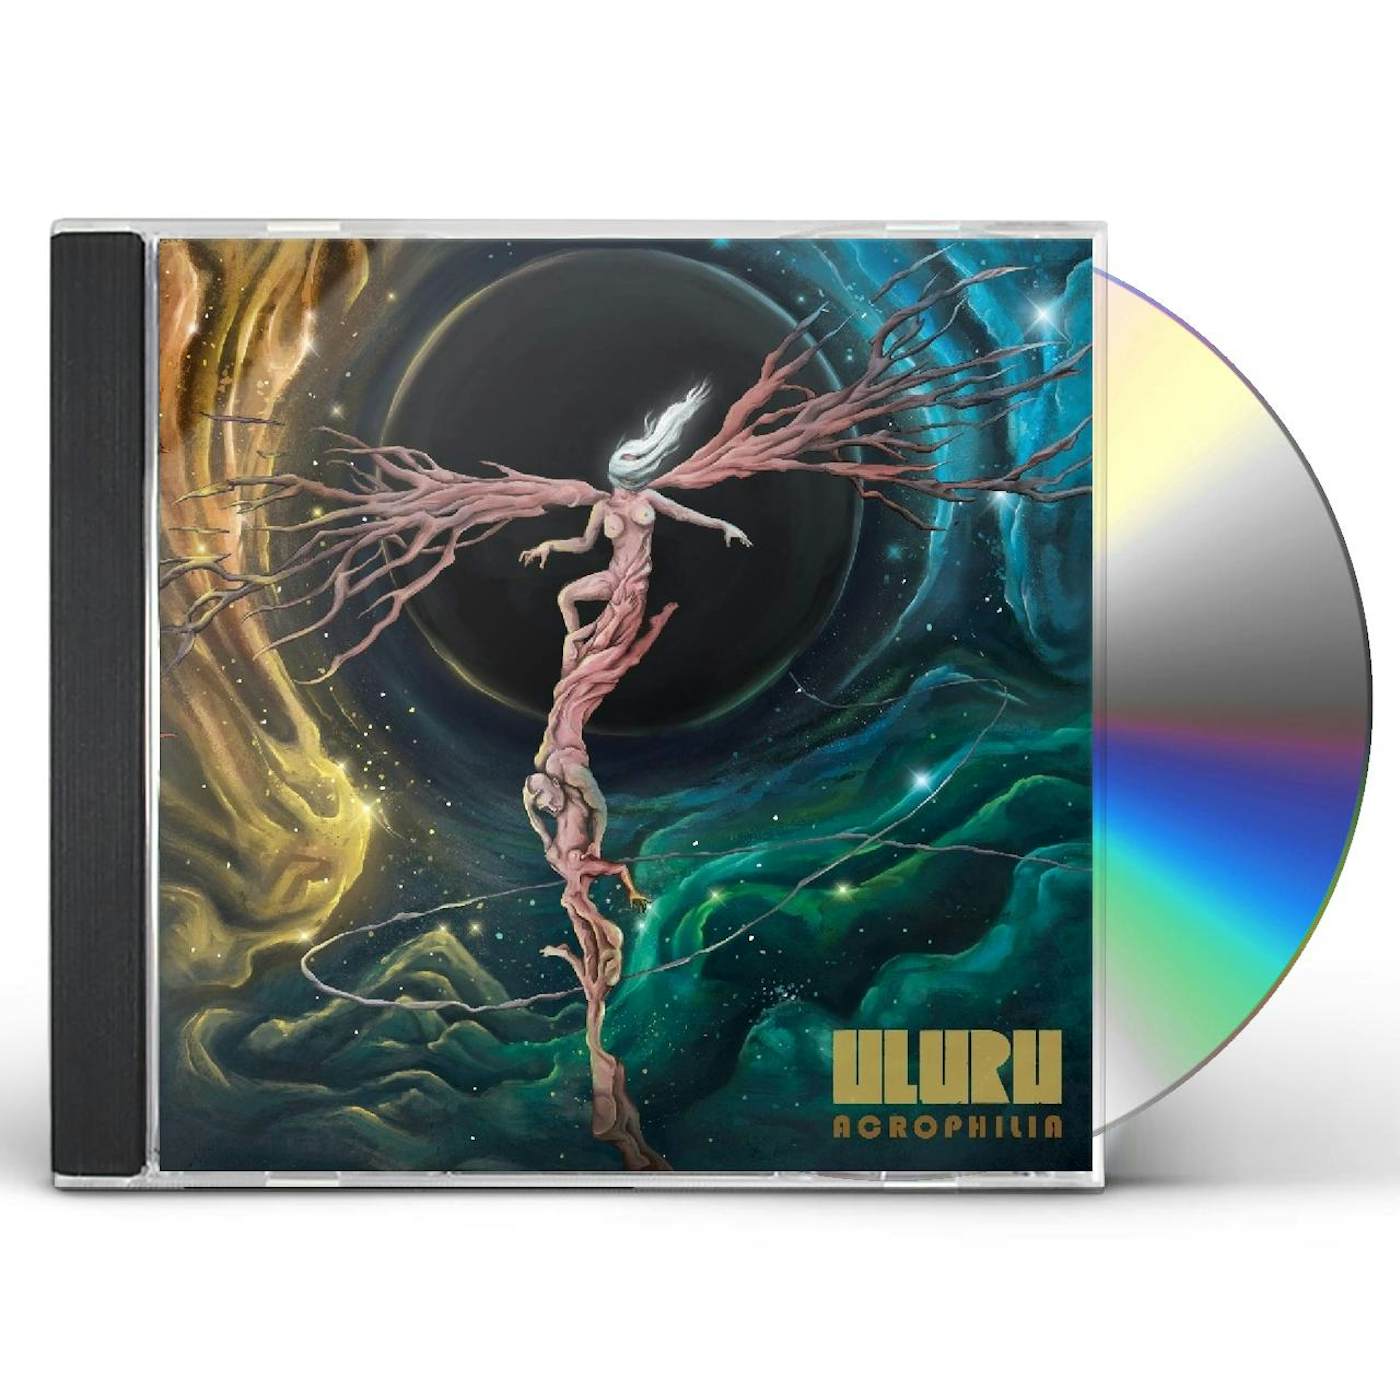 Uluru ACROPHILIA CD